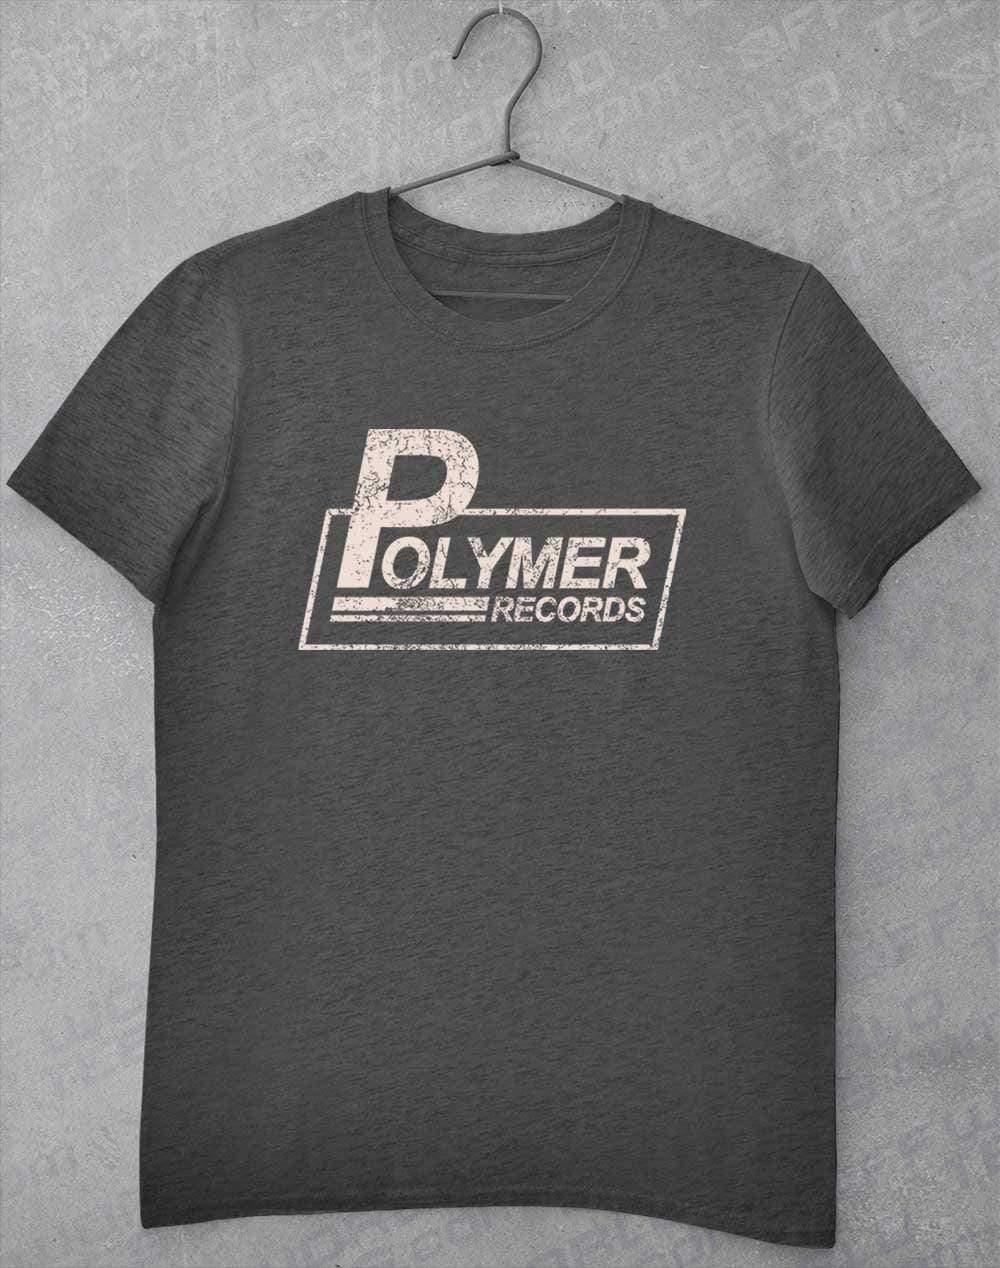 Polymer Records Distressed Logo T-Shirt S / Dark Heather  - Off World Tees